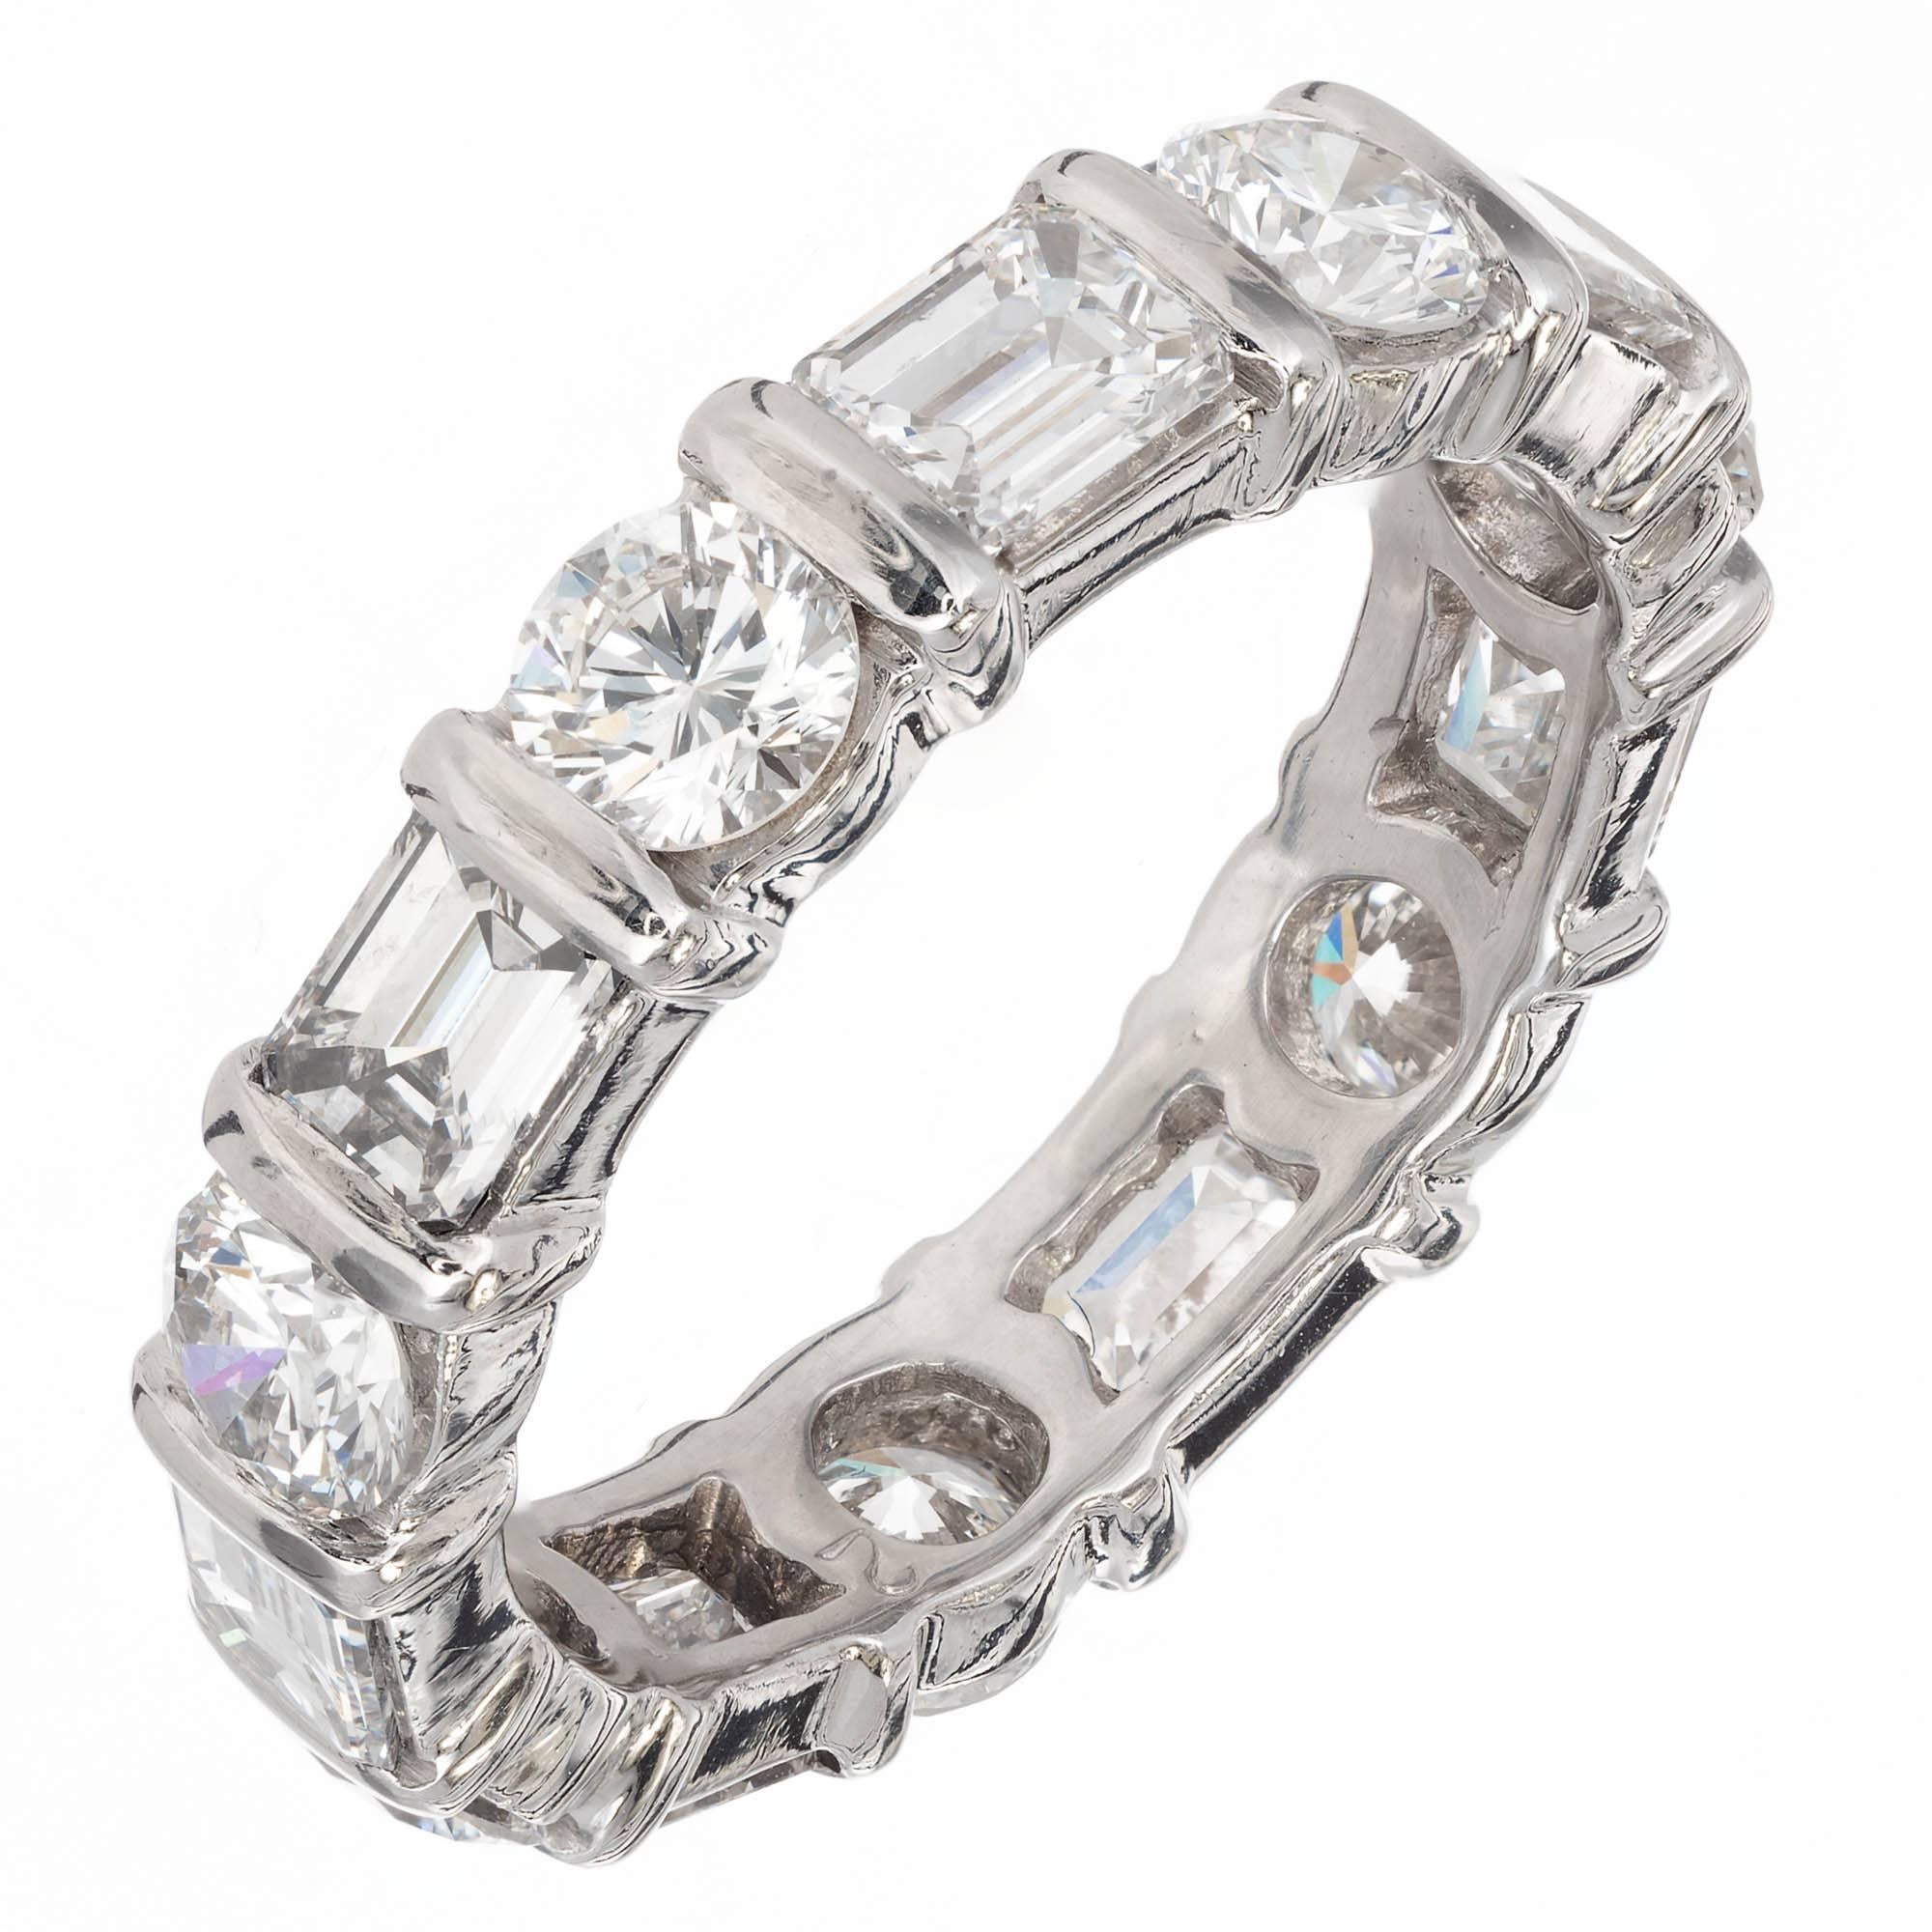 3.42 Carat Diamond Platinum Wedding Band Ring